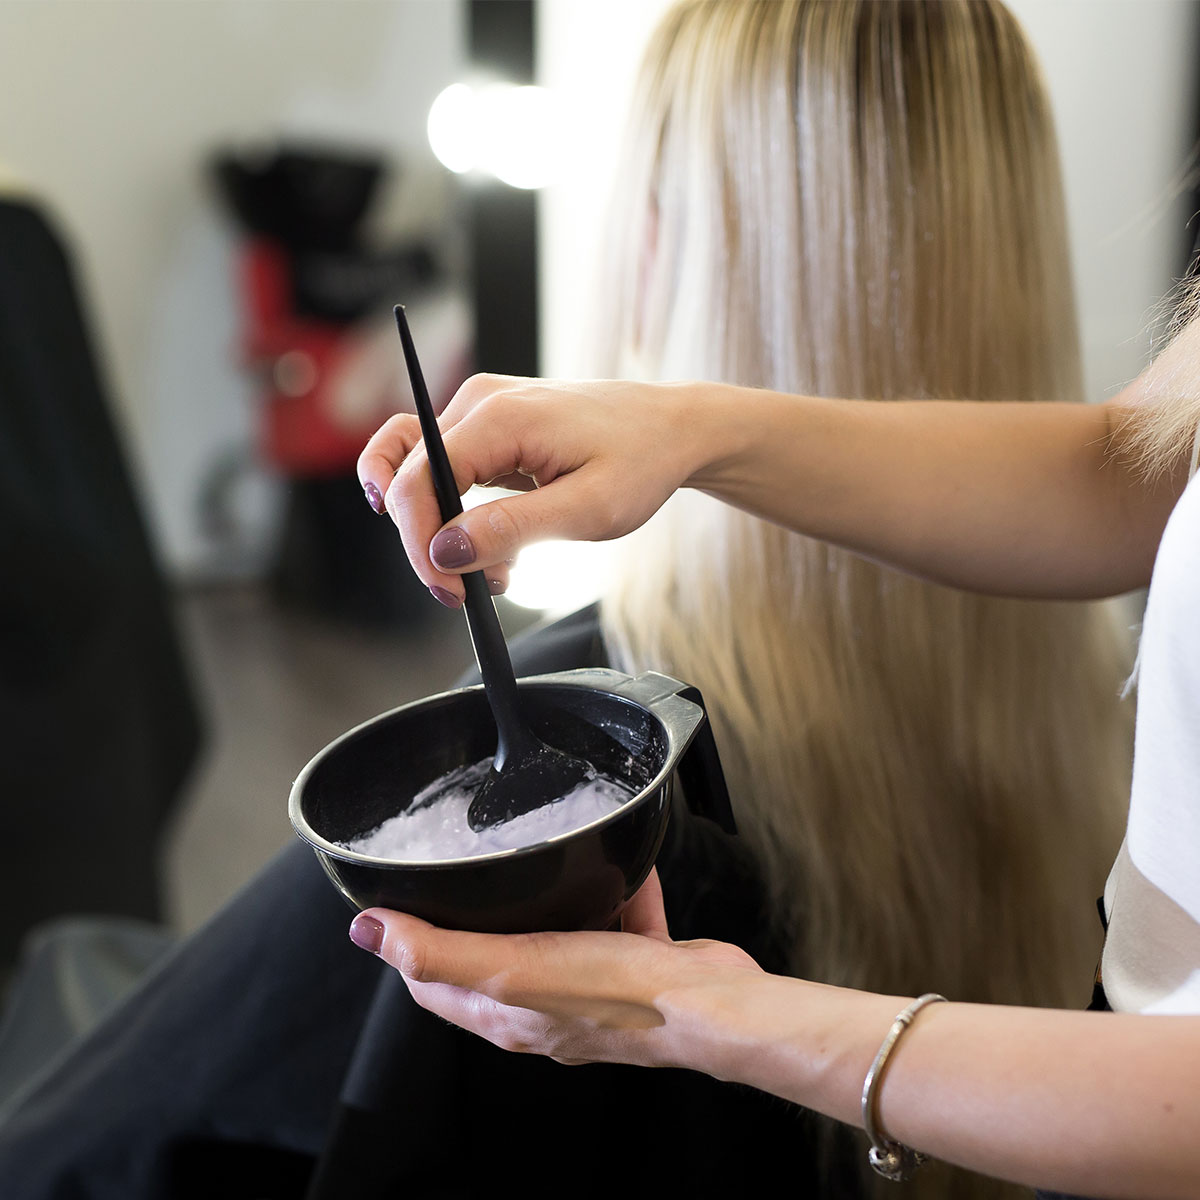 stylist mixing hair dye in salon black bowl blonde client